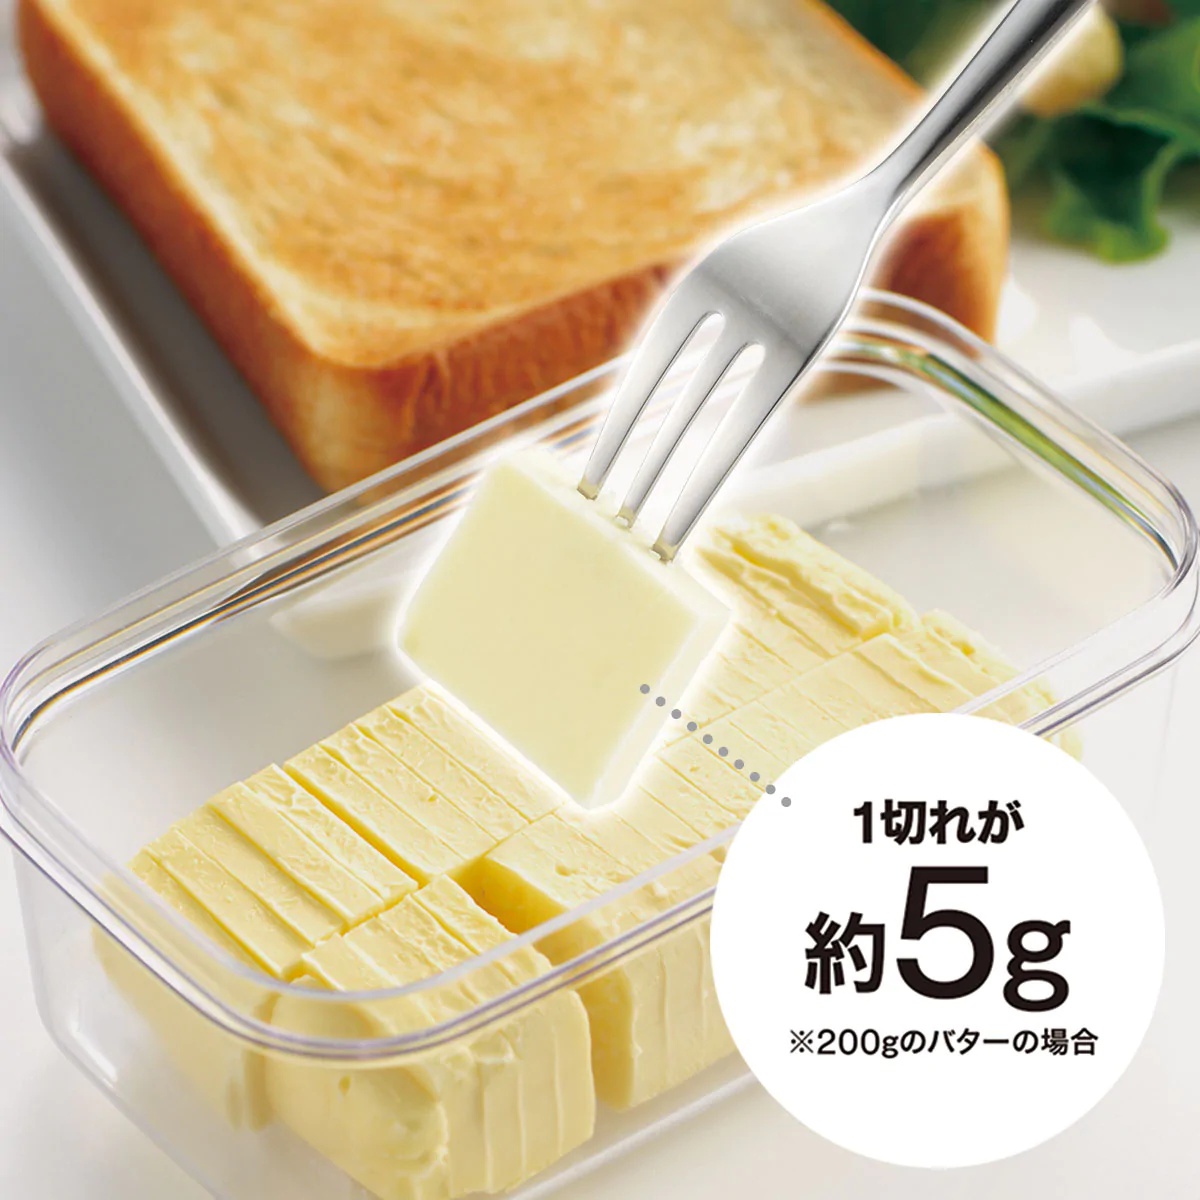 NITORI(ニトリ) バターケースの商品画像サムネ4 